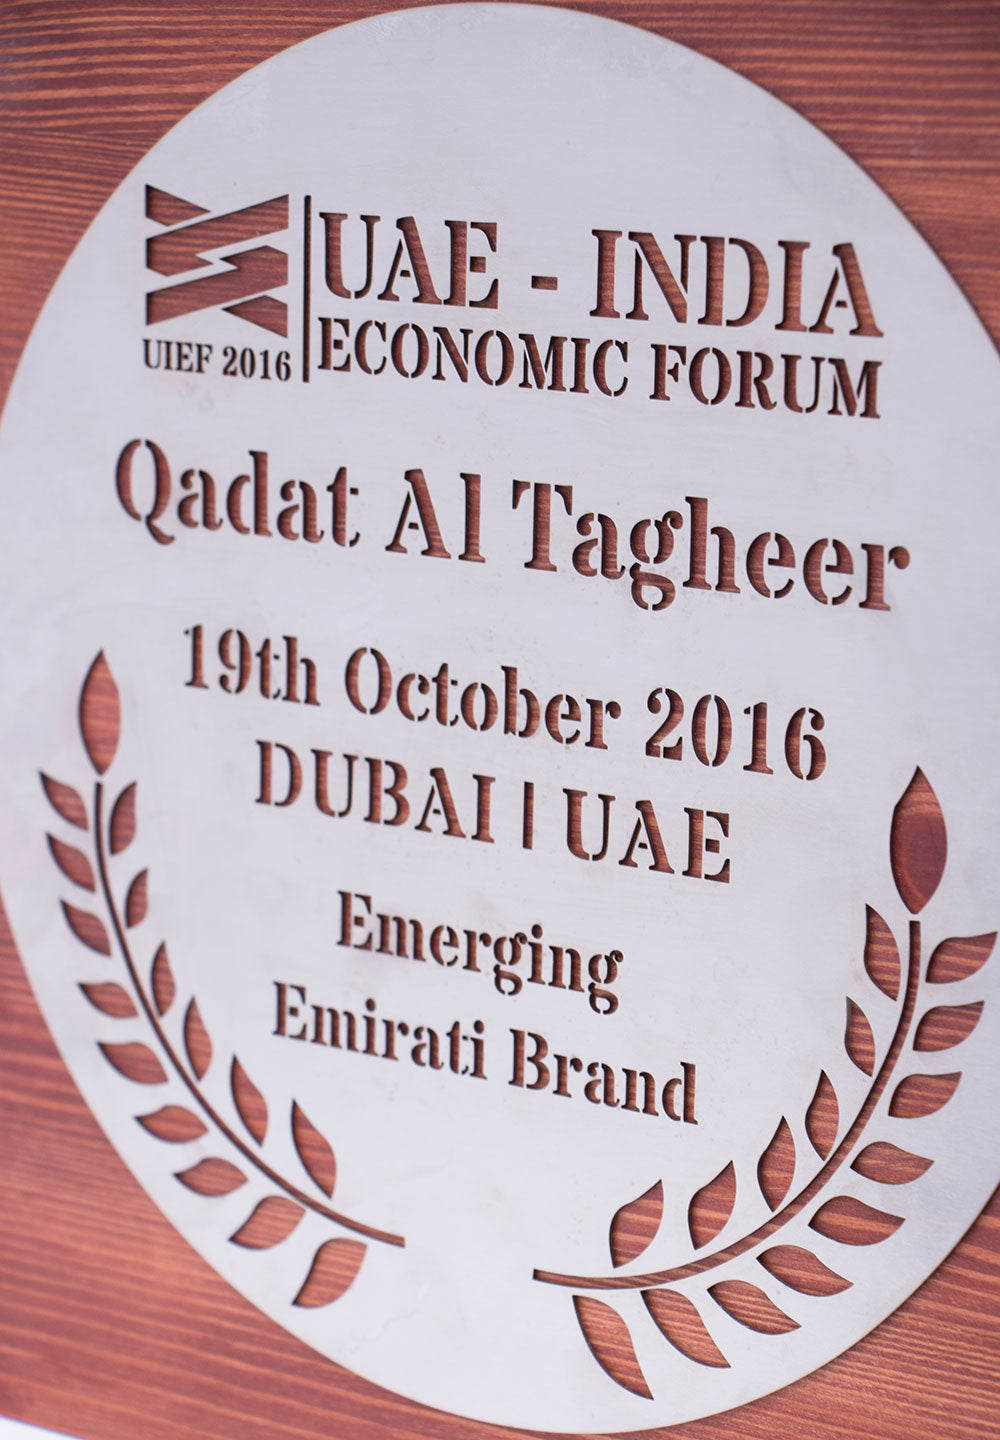 Qadat Al Tagheer Award